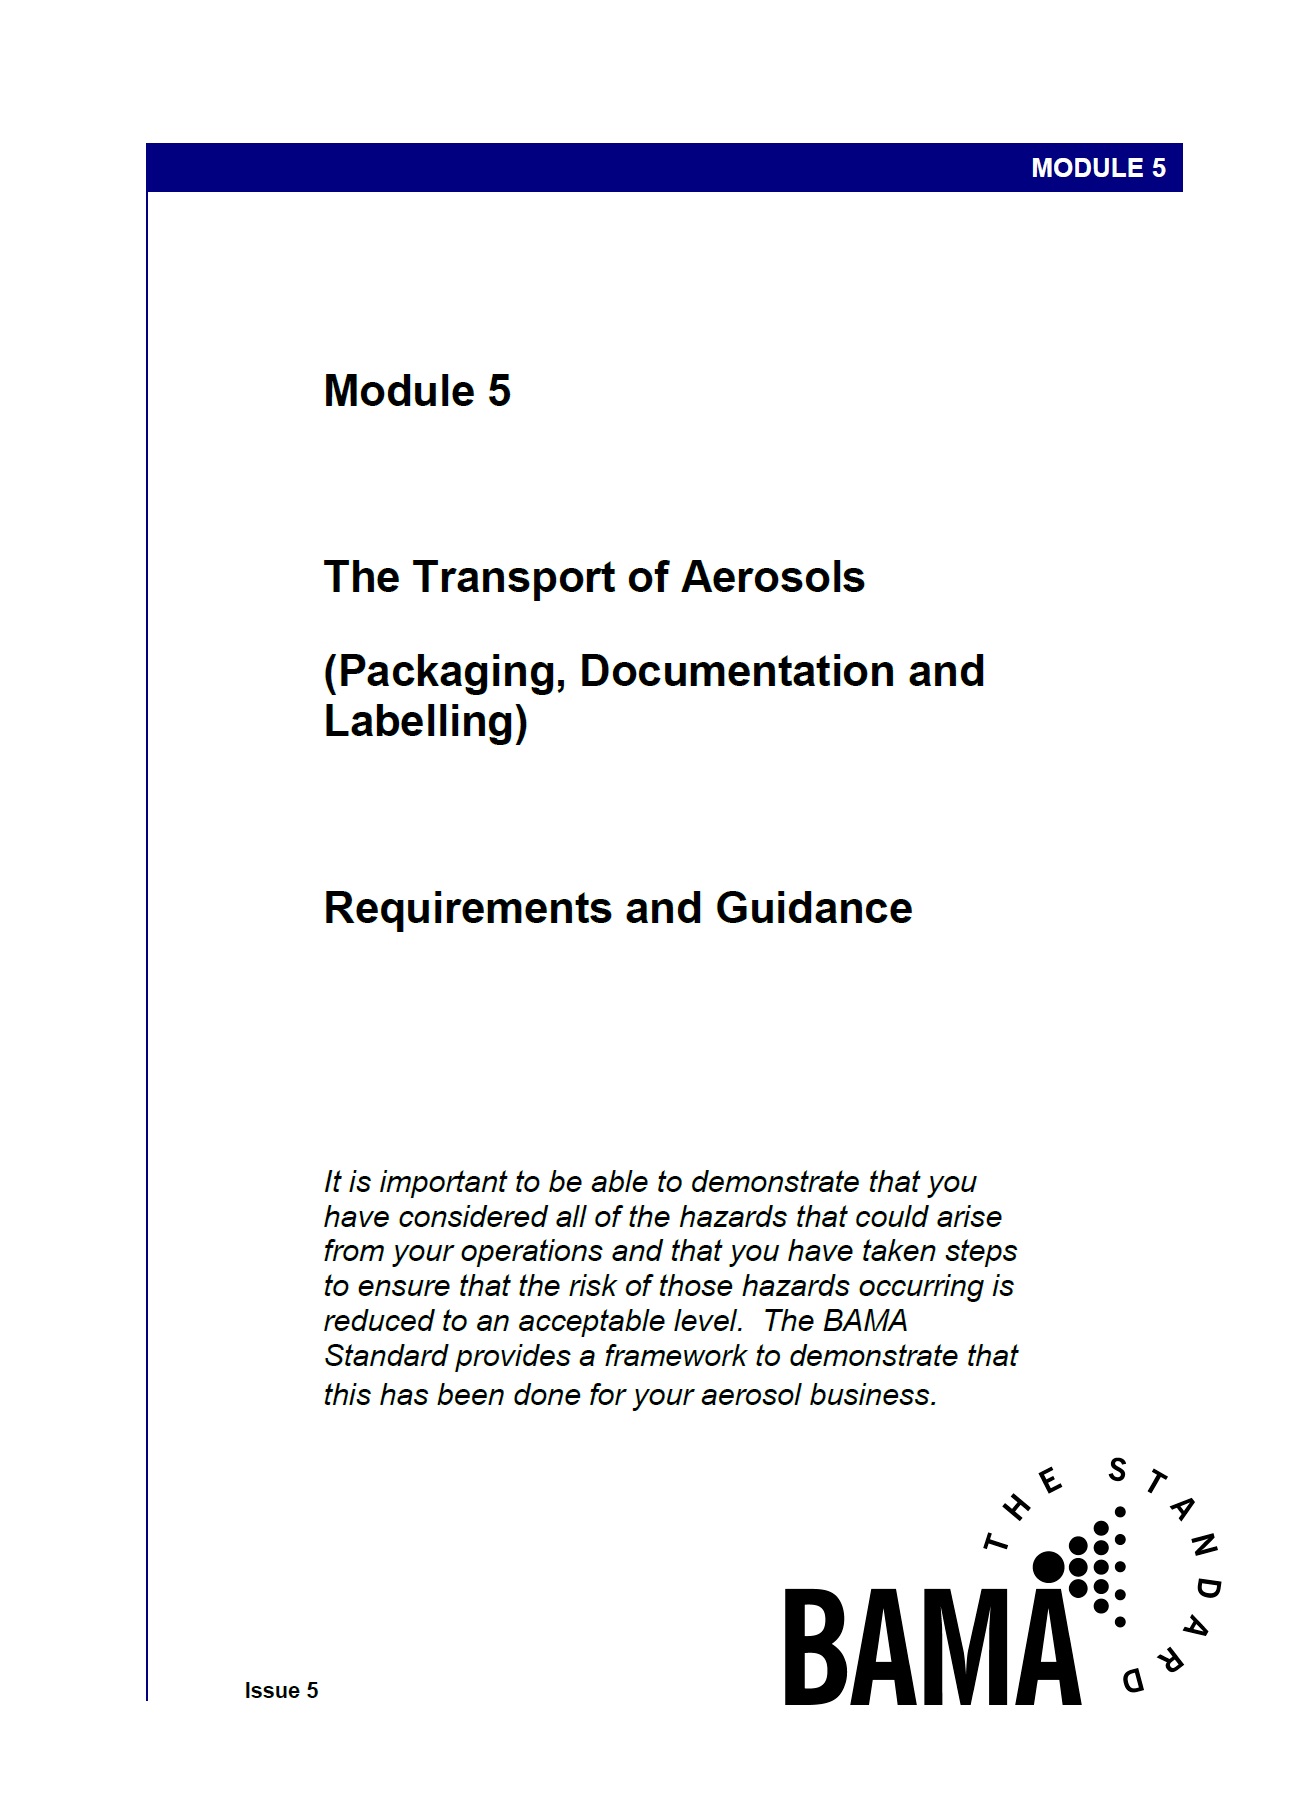 Module 5: Transport of Aerosols